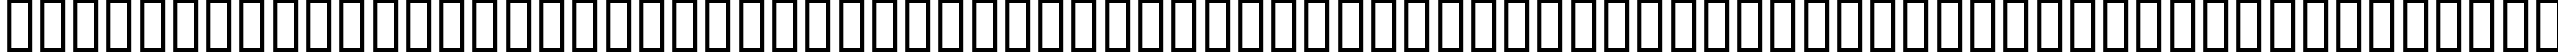 Пример написания английского алфавита шрифтом BD DeLaFrance